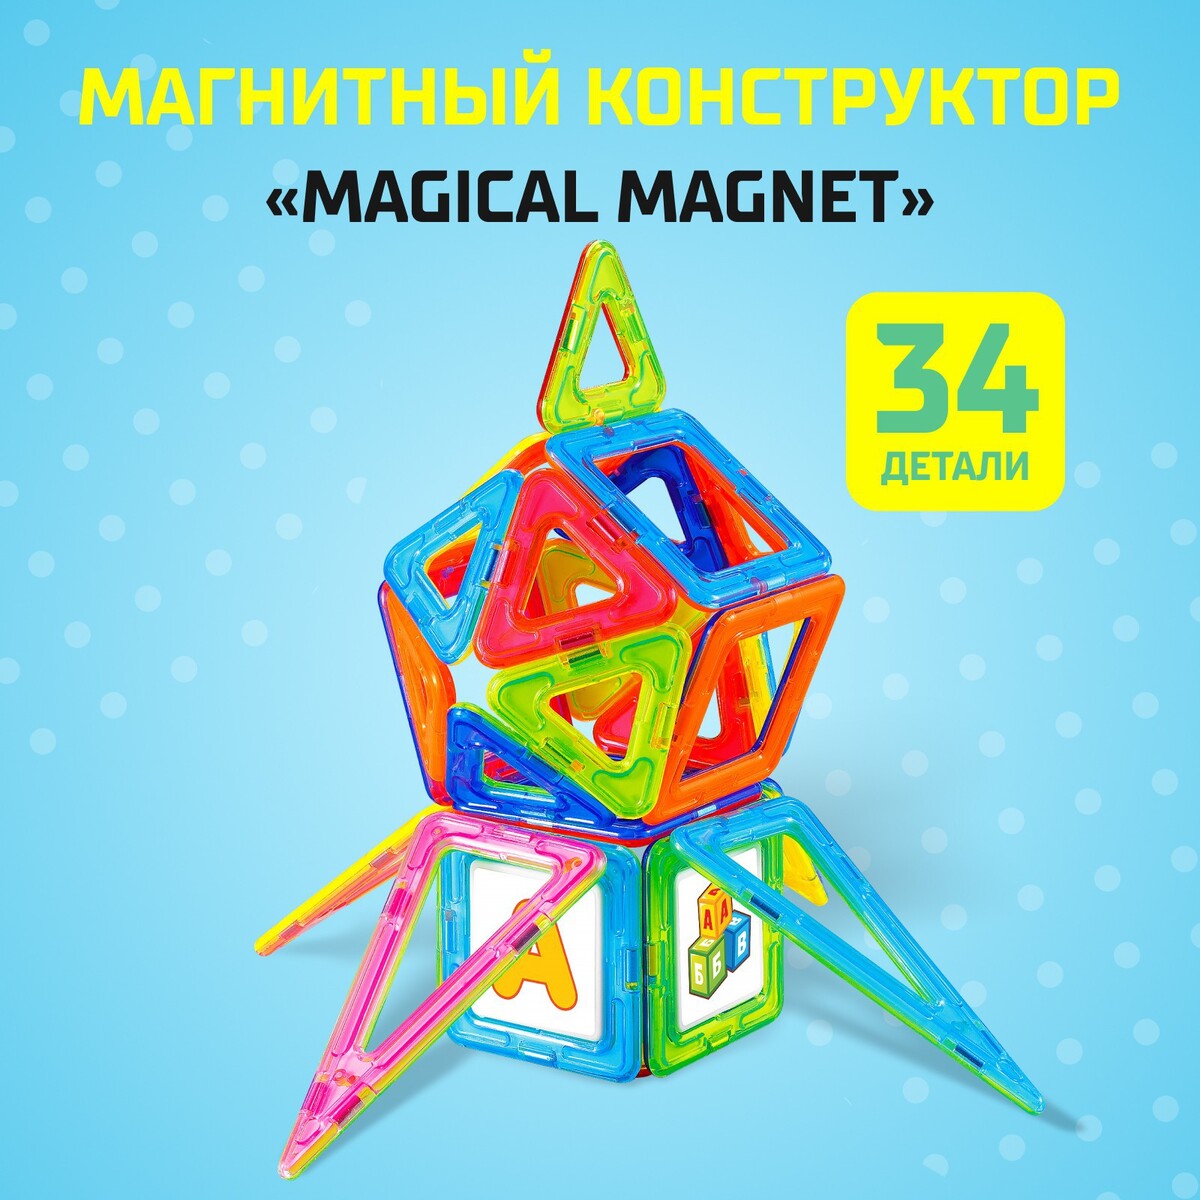   magical magnet, 34 ,  